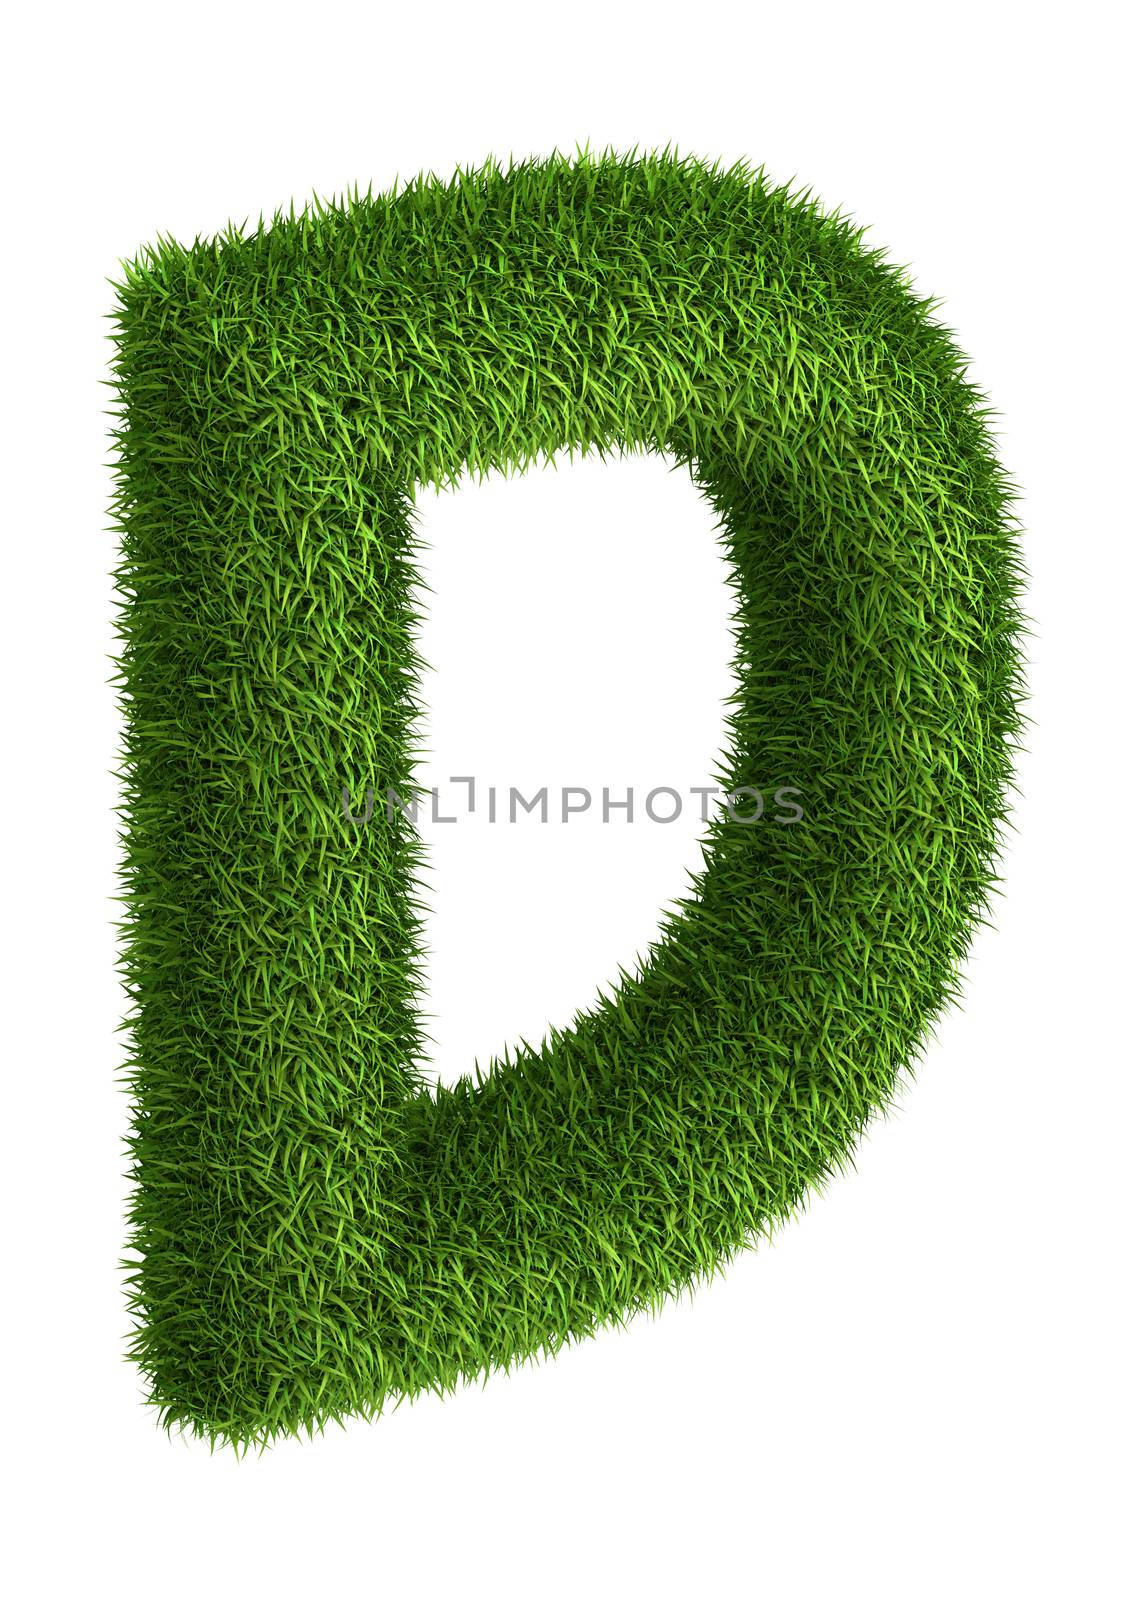 Natural grass letter D by iunewind